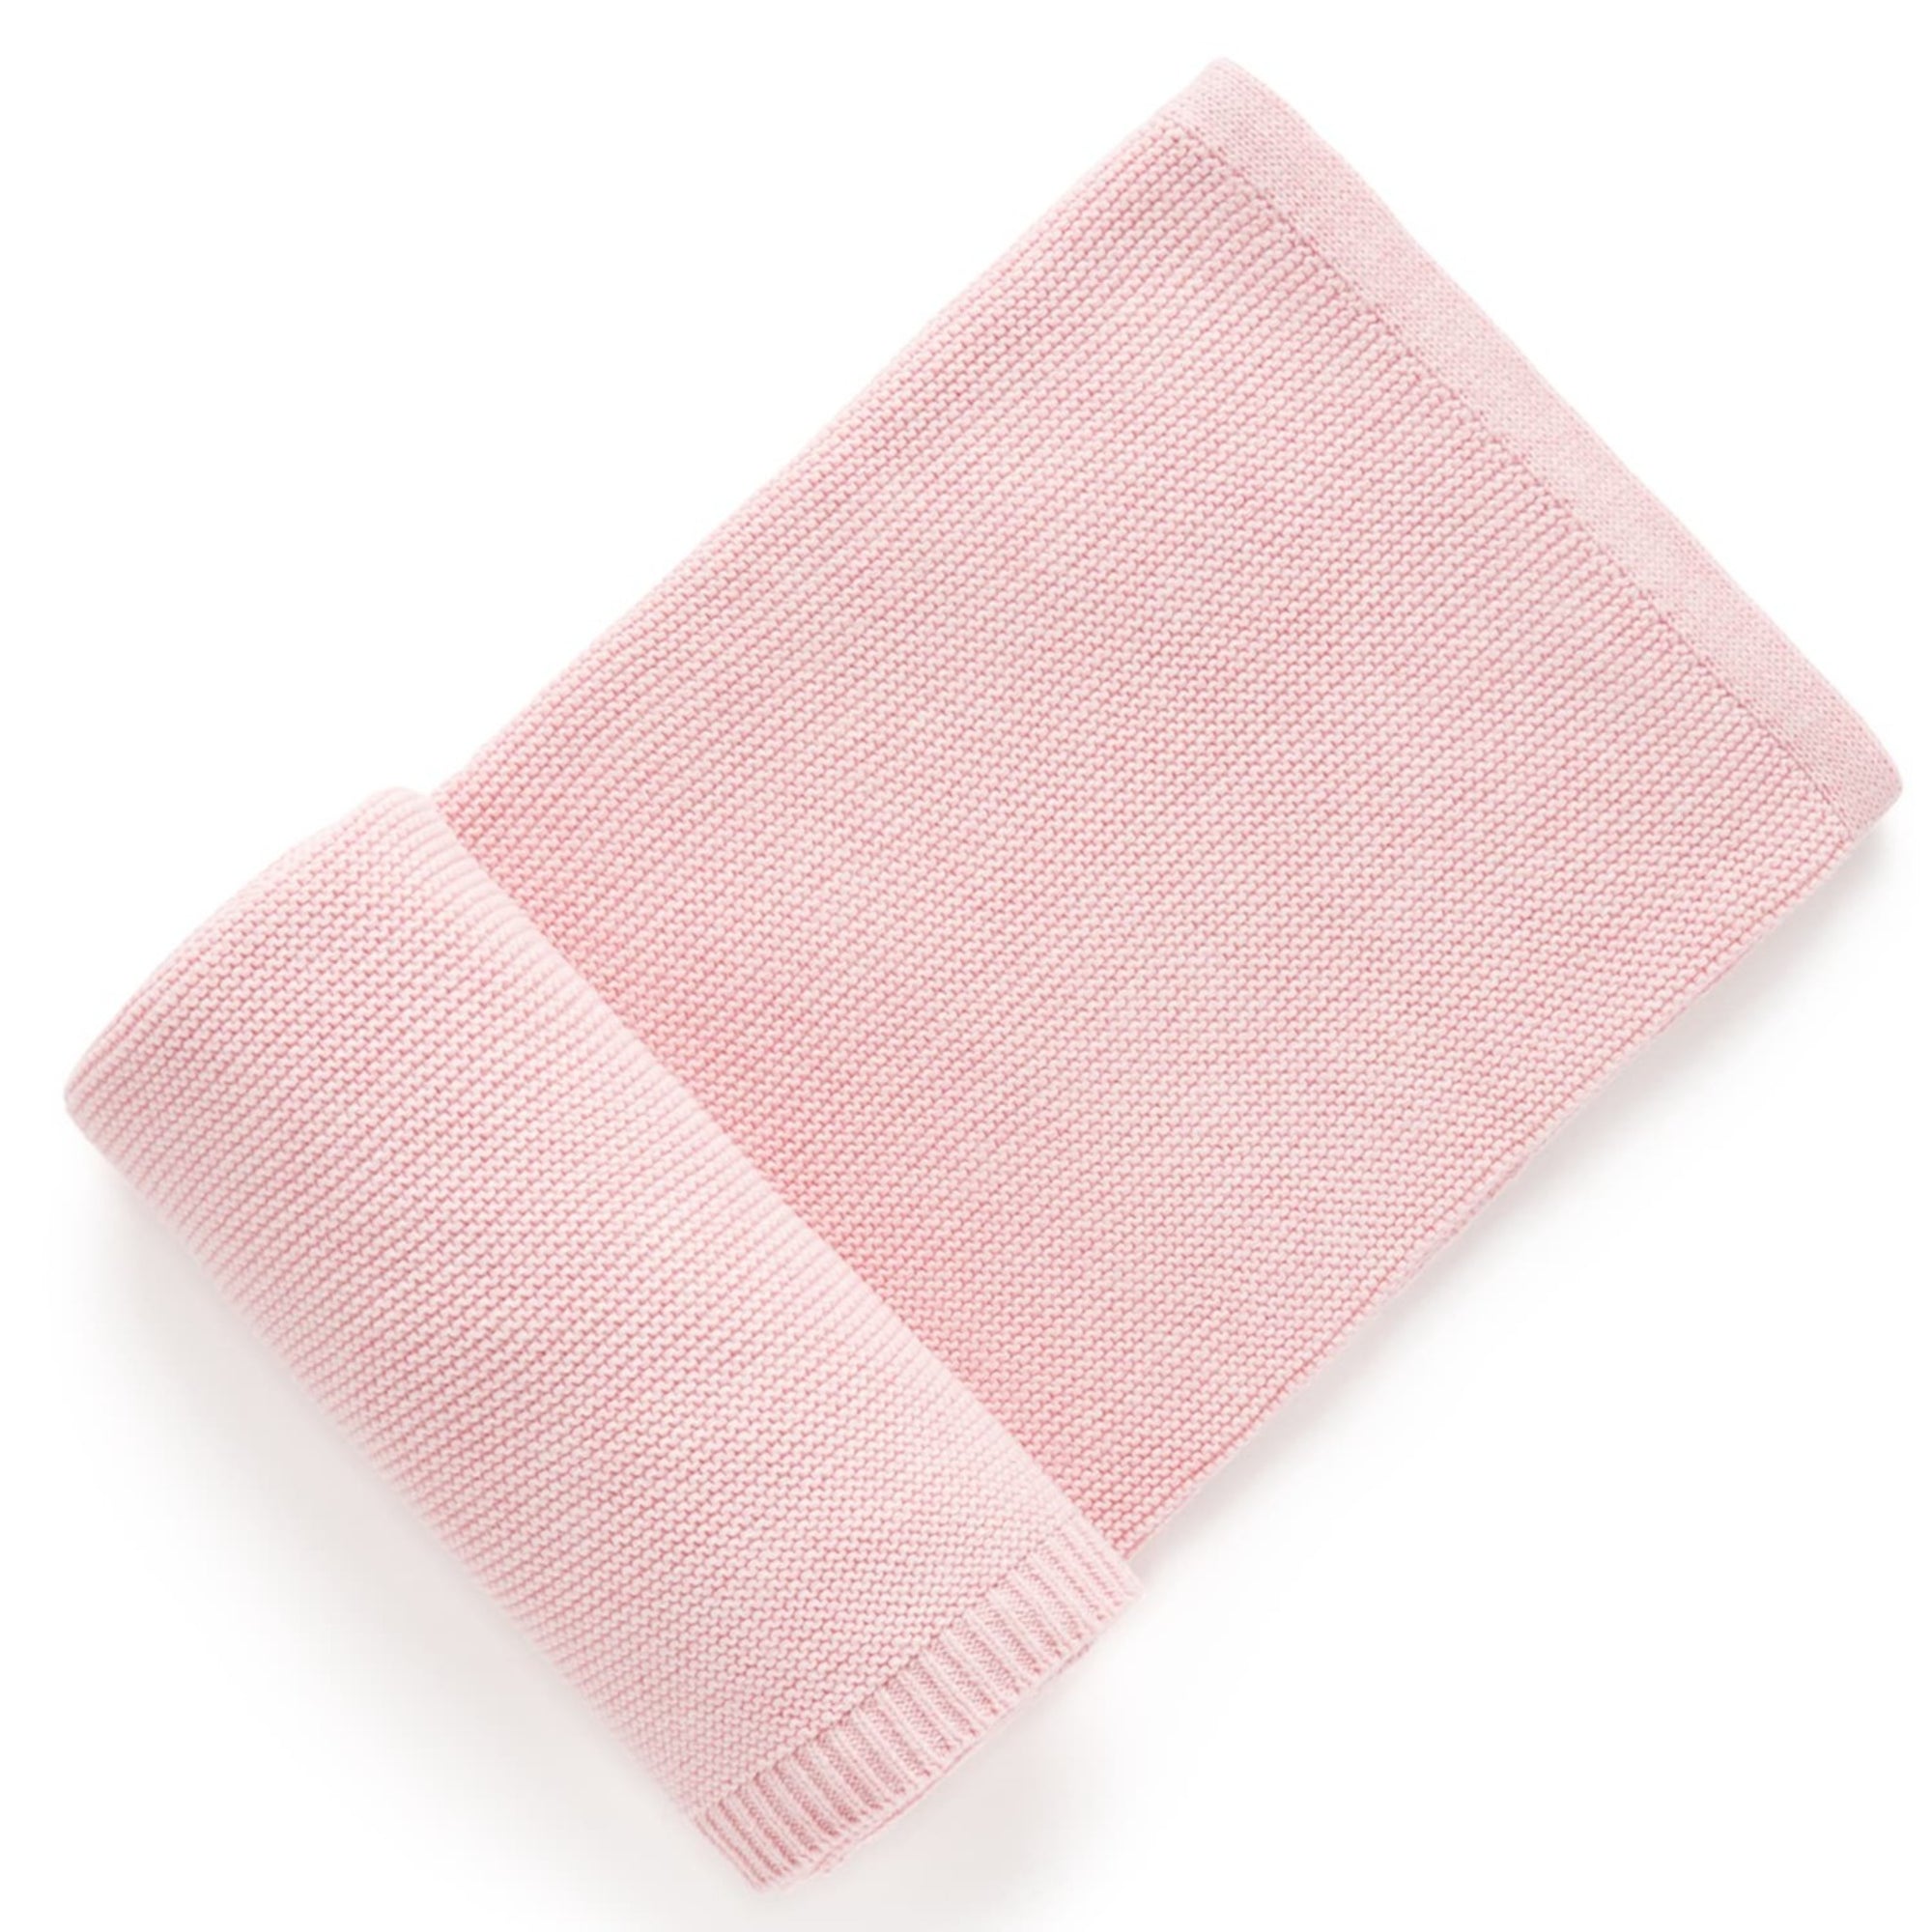 Purebaby Textured Blanket - Pink